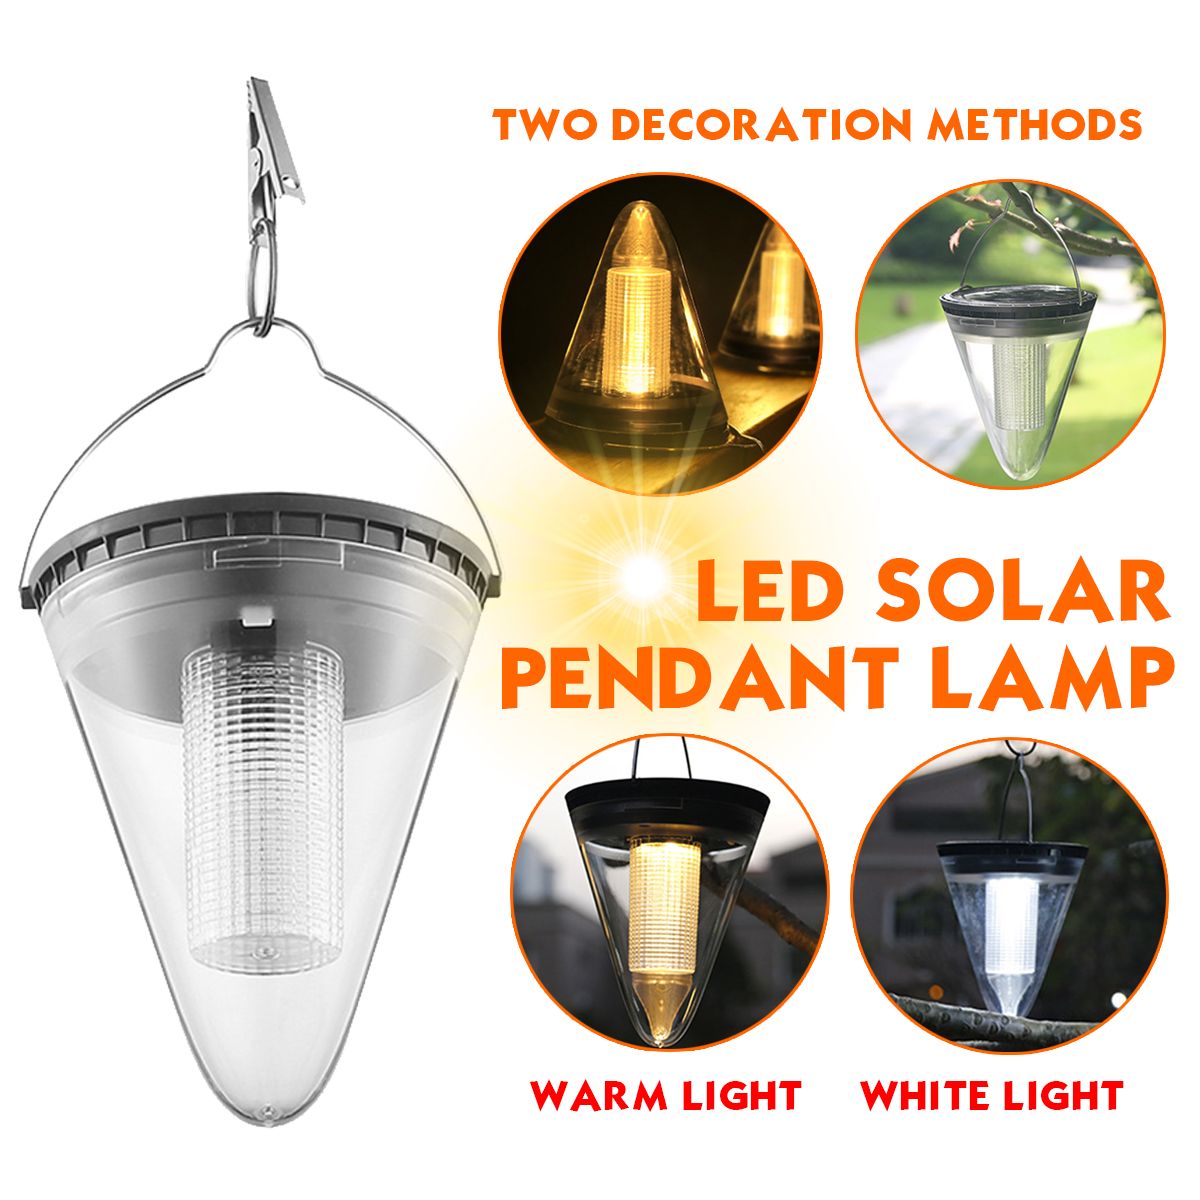 Solar-Powered-LED-Tree-Hanging-Light-Garden-Path-Way-Fence-Yard-Patio-Lamp-Waterproof-Decor-1721262